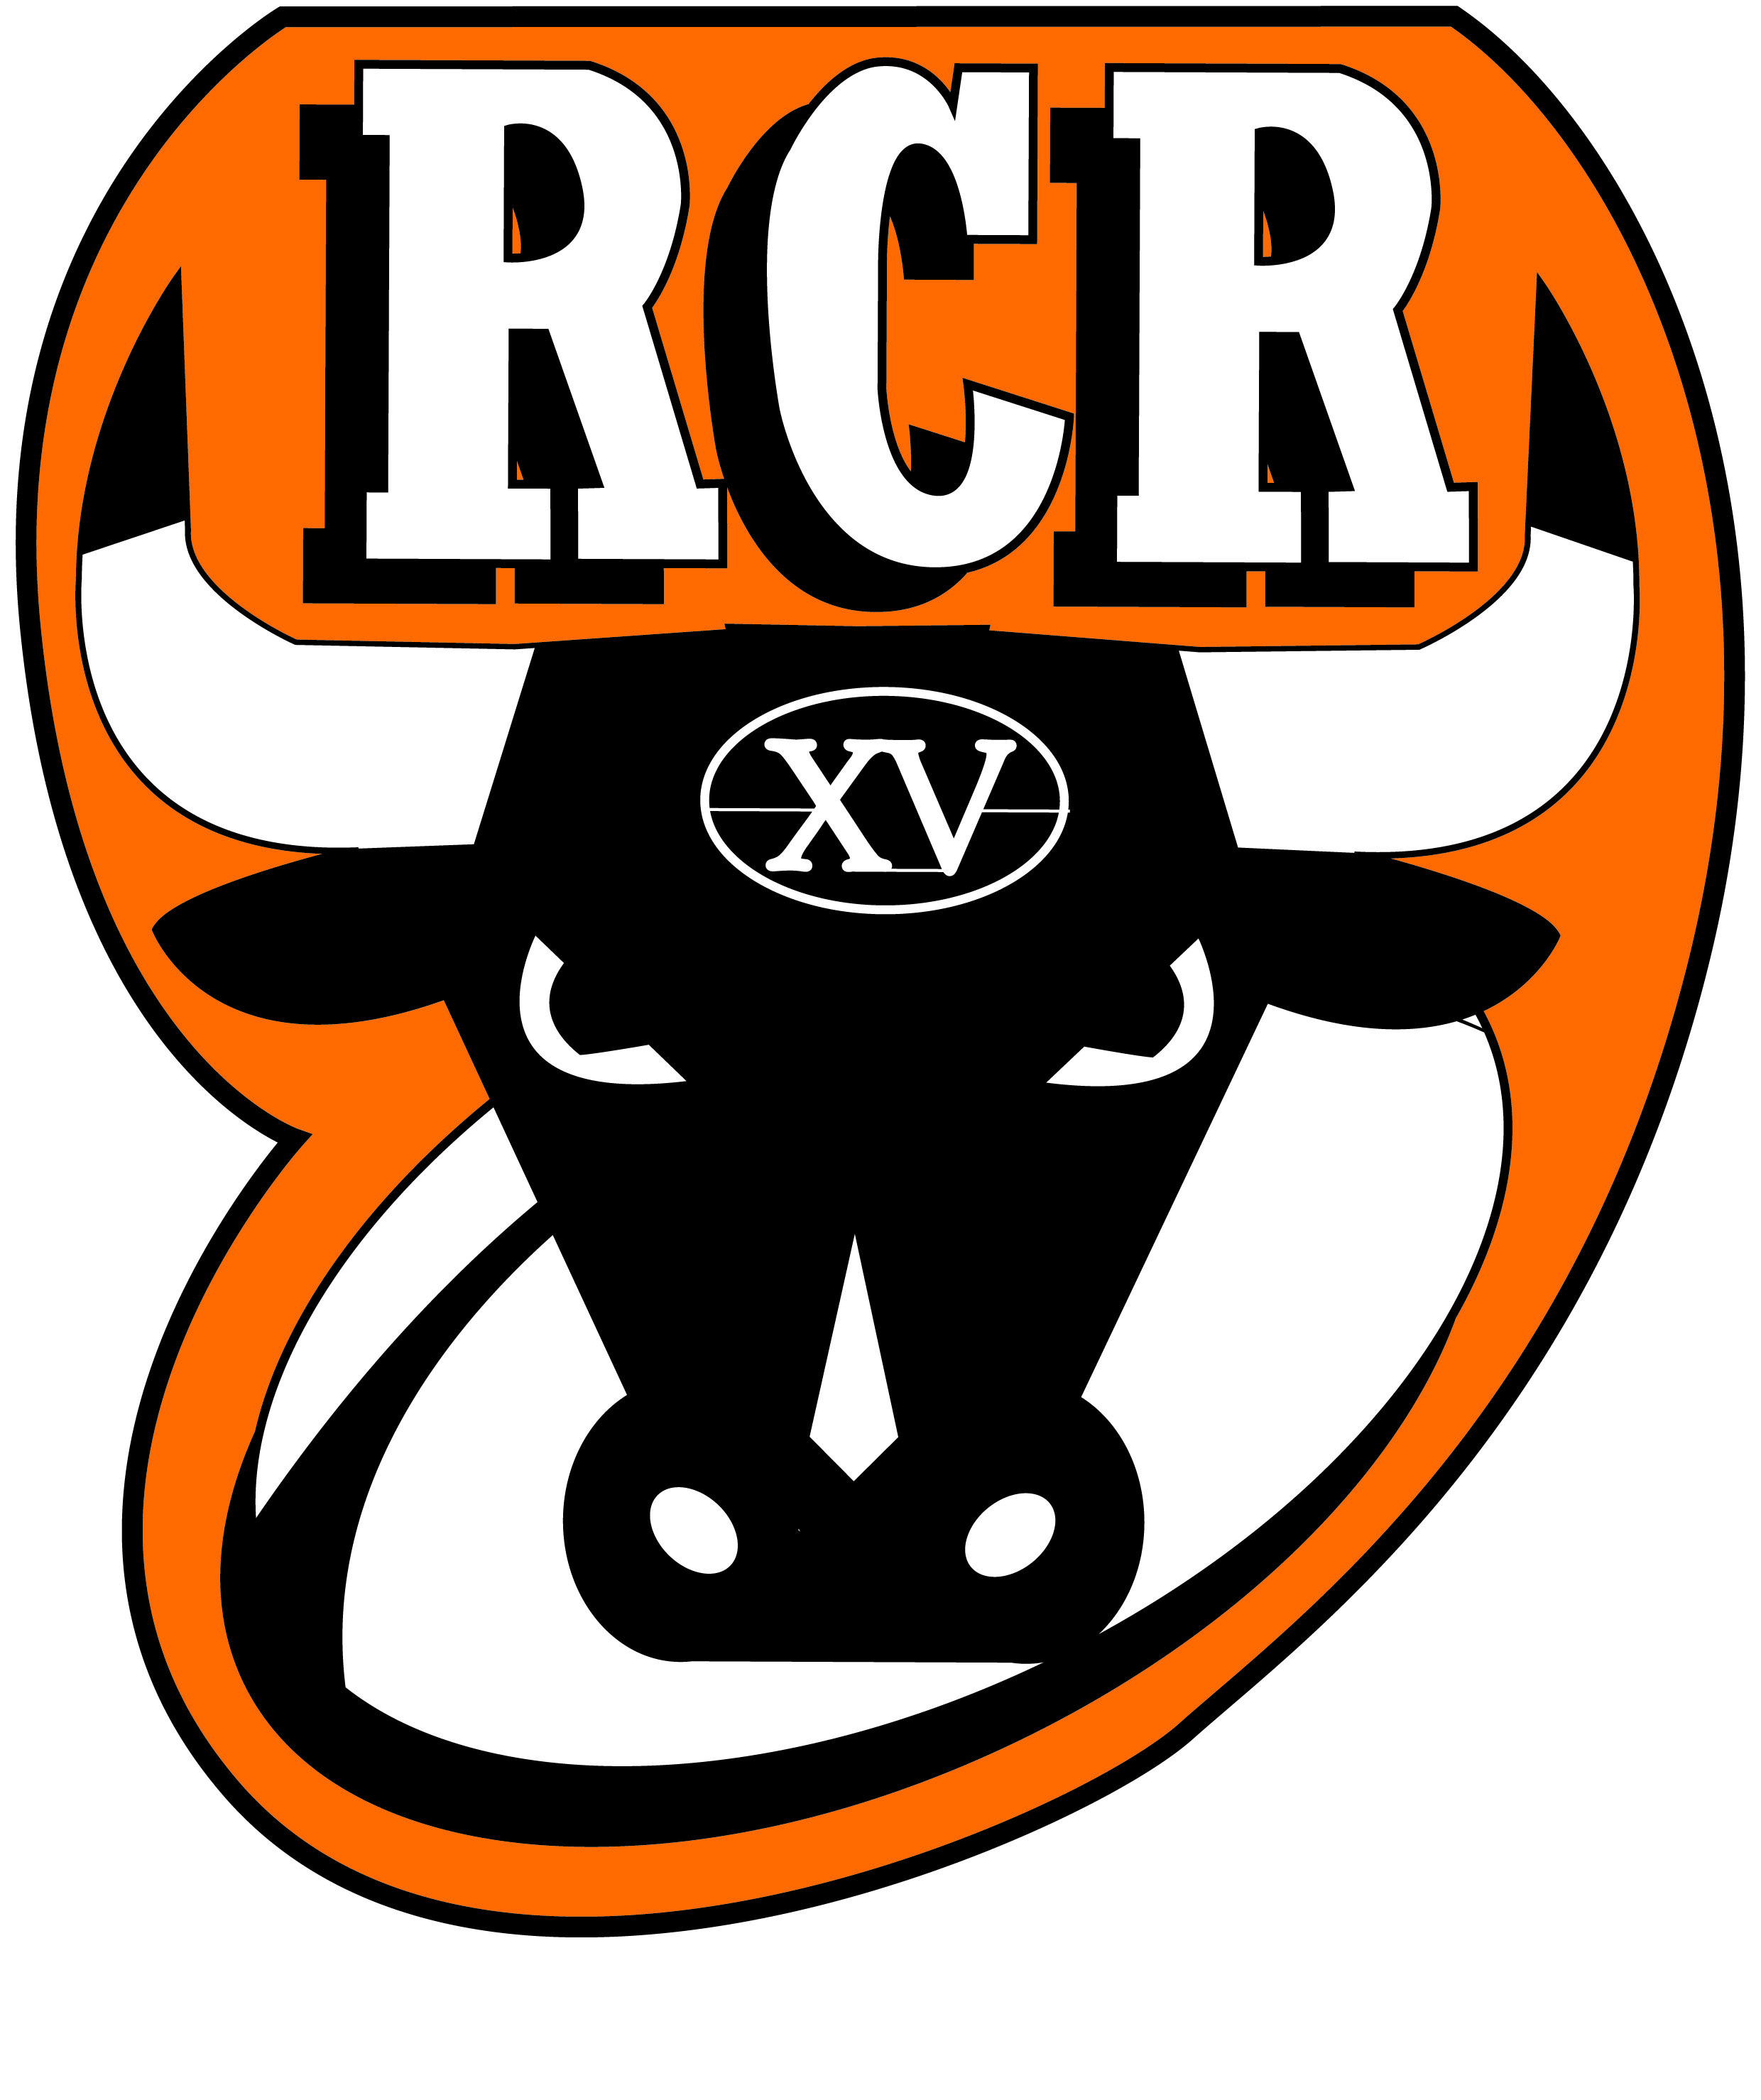 rugby-club-roubaix-logo-633448a2558c5828064698.jpg